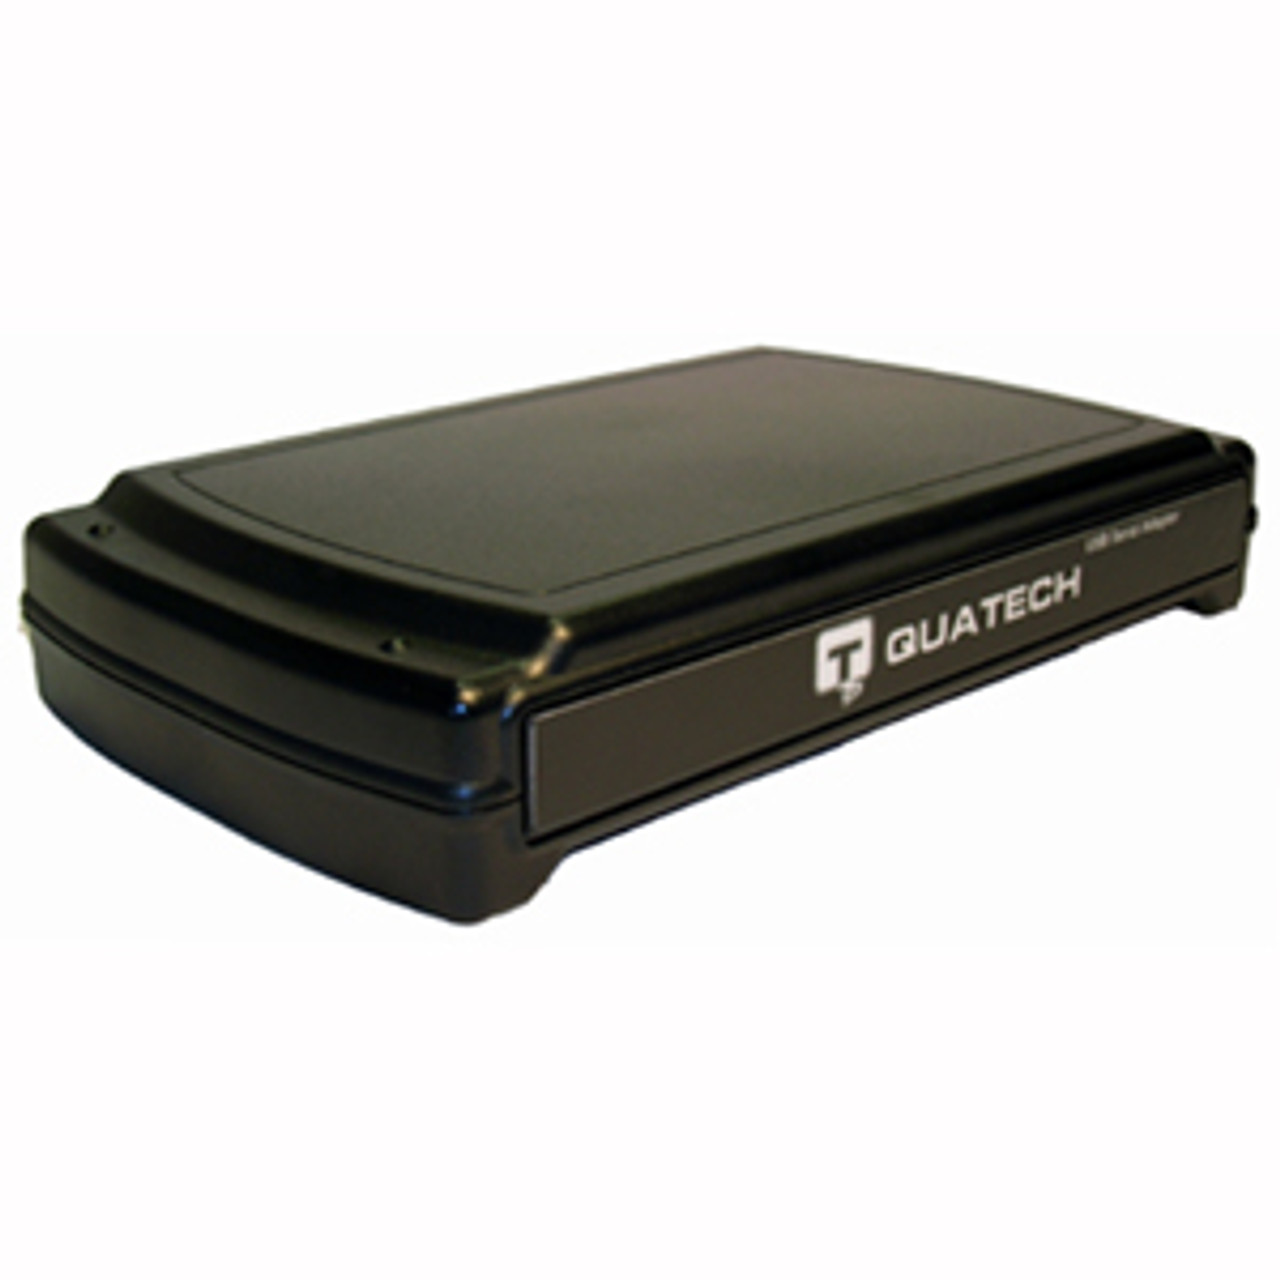 QSU2-400 Quatech 922Kbps Quad-Ports RS-232 / RS-422 / RS-485 USB 2.0 Serial Adapter